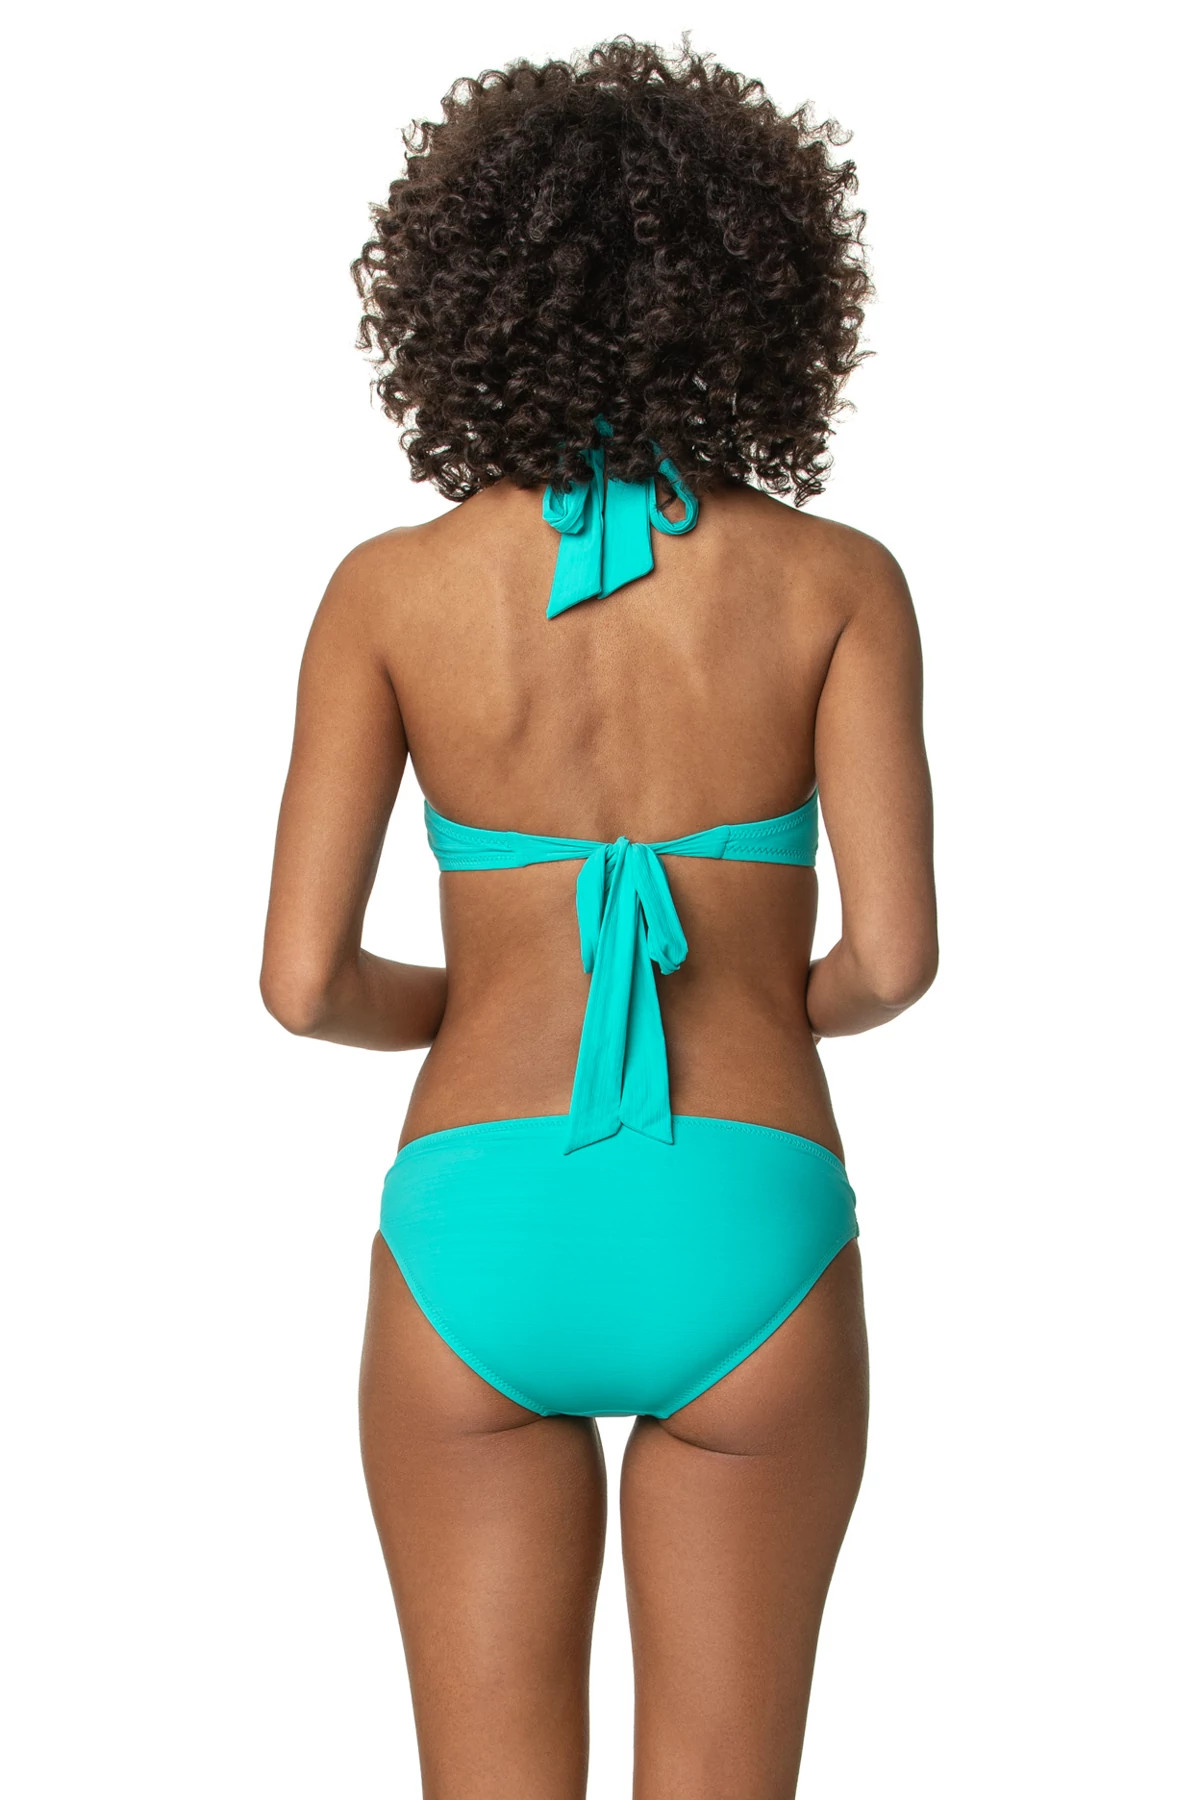 SEAFOAM AQUA Textured Ring Front Halter Bikini Top image number 2